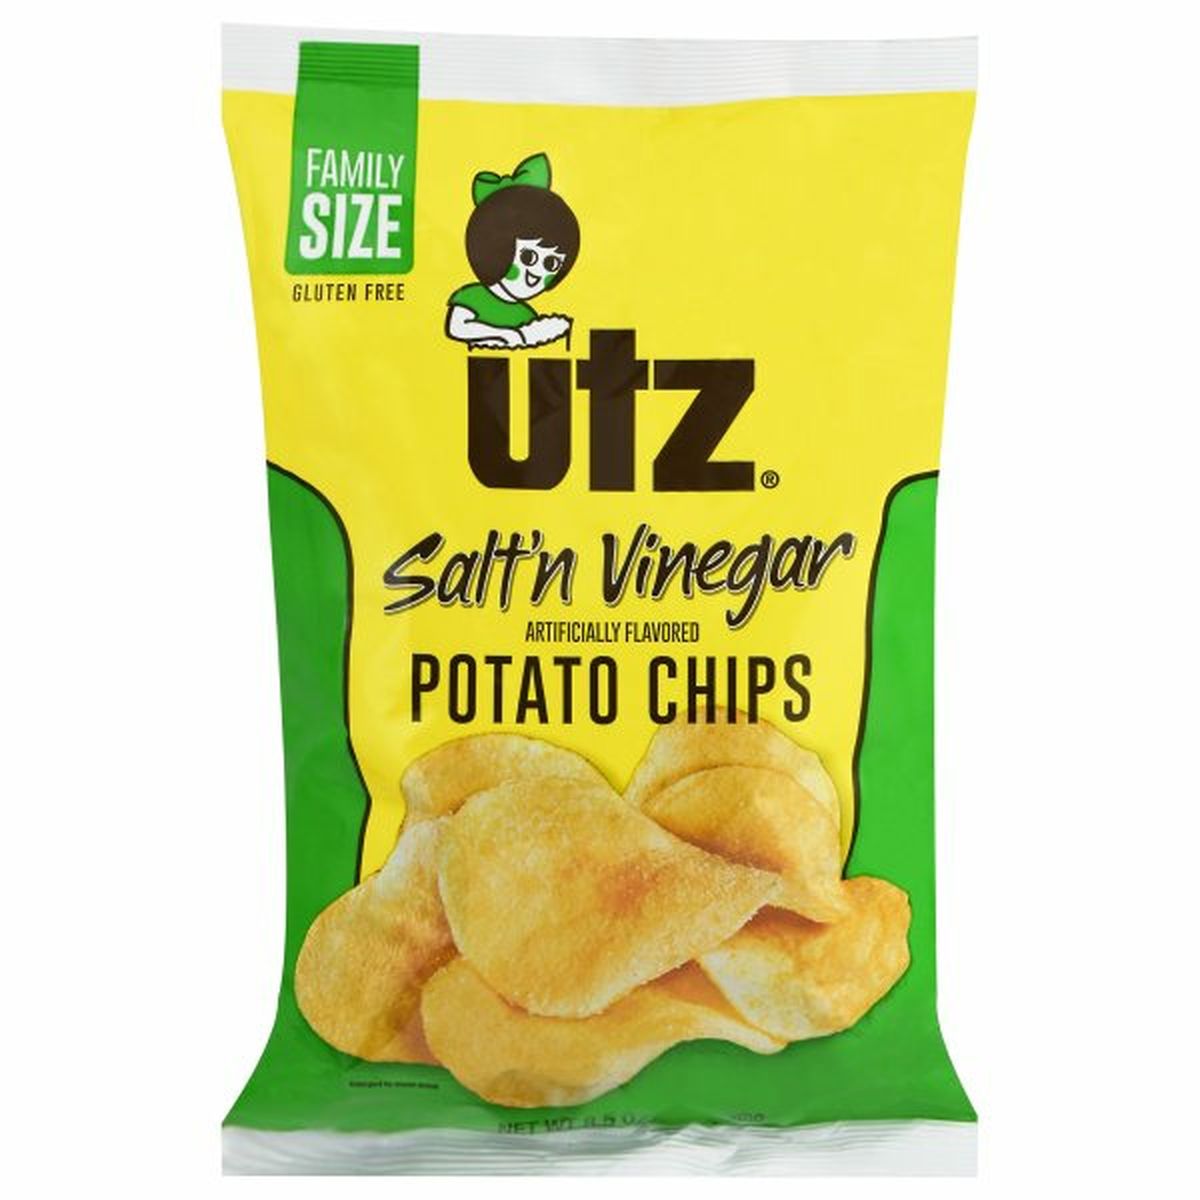 Calories in Utz Potato Chips, Saltâ€™n Vinegar, Family Size